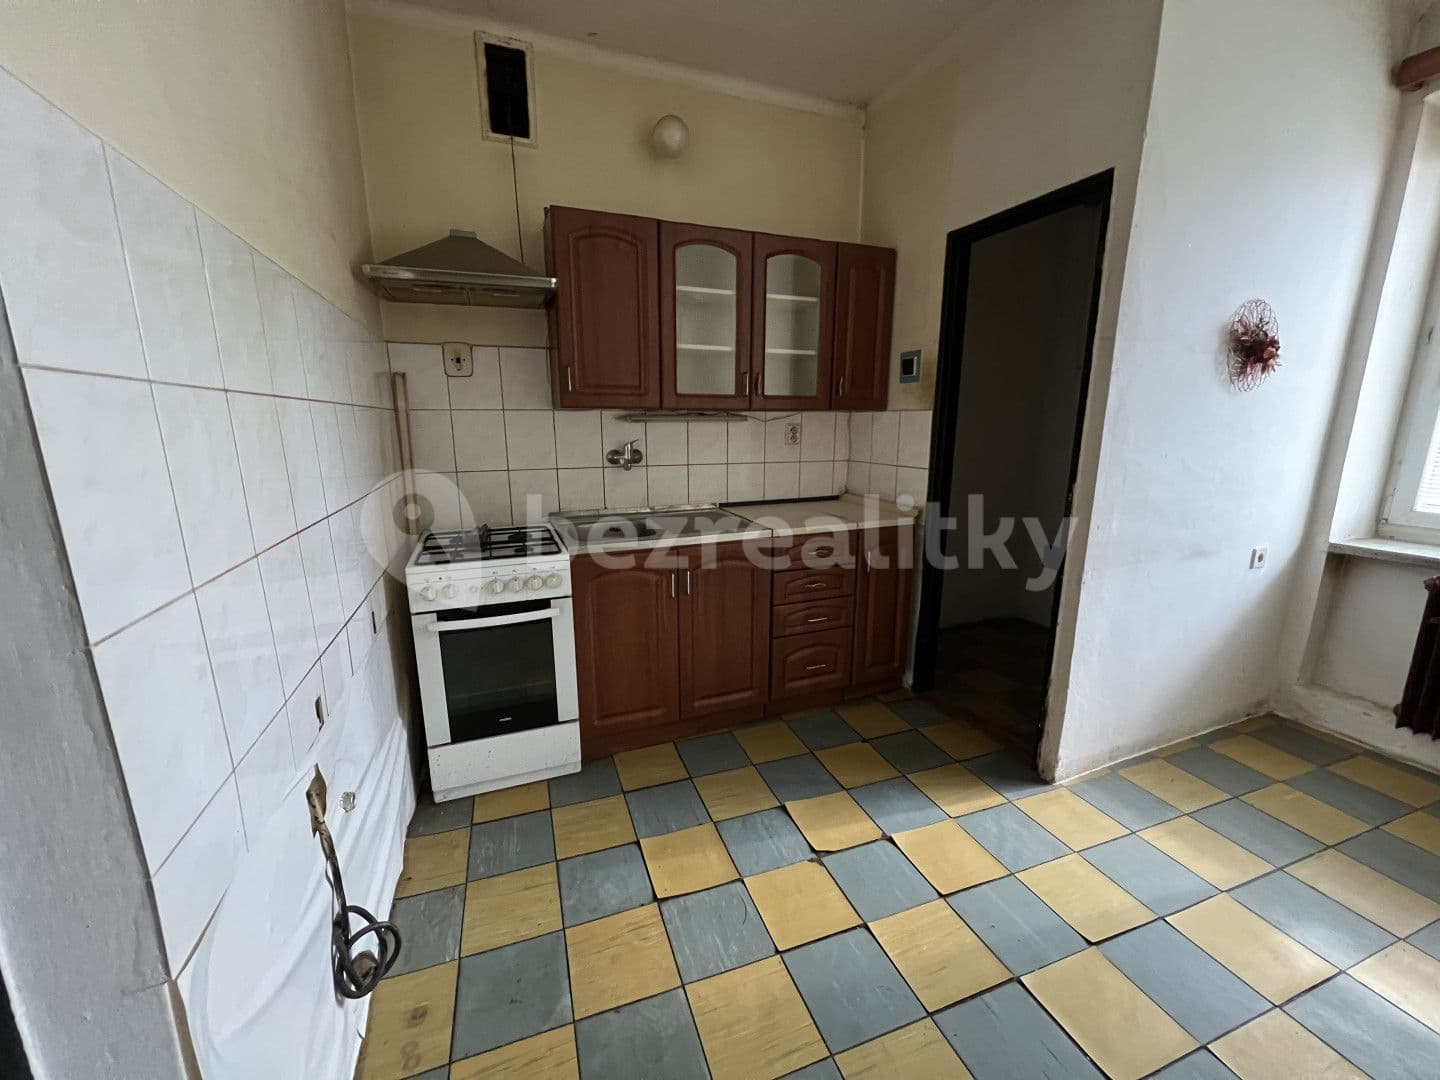 3 bedroom flat for sale, 74 m², Mladeč, Olomoucký Region